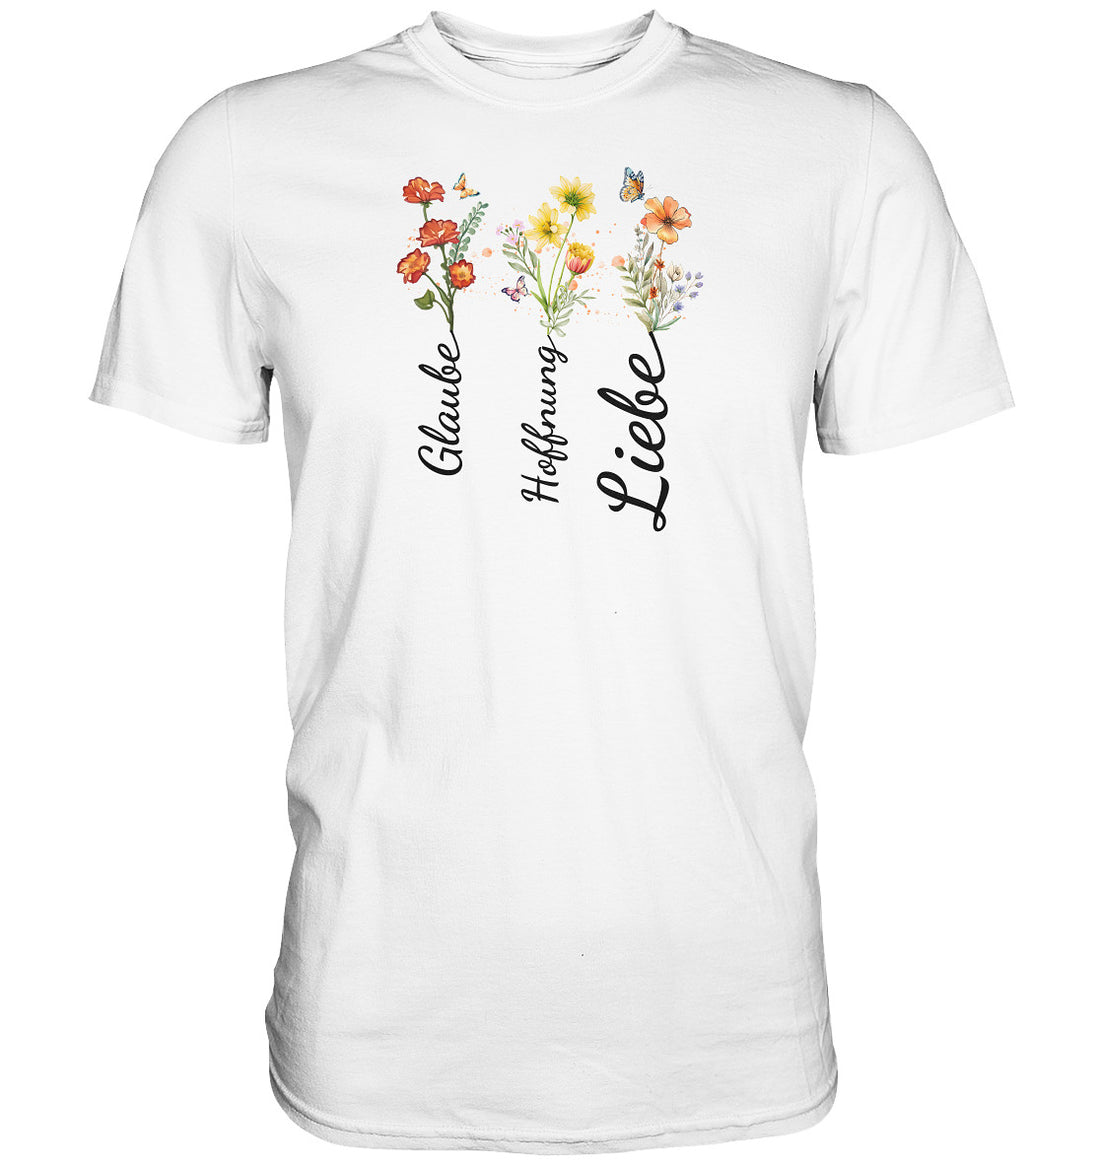 1.Kor 13,13 - Glaube, Hoffnung, Liebe - Brustprint - Premium Shirt